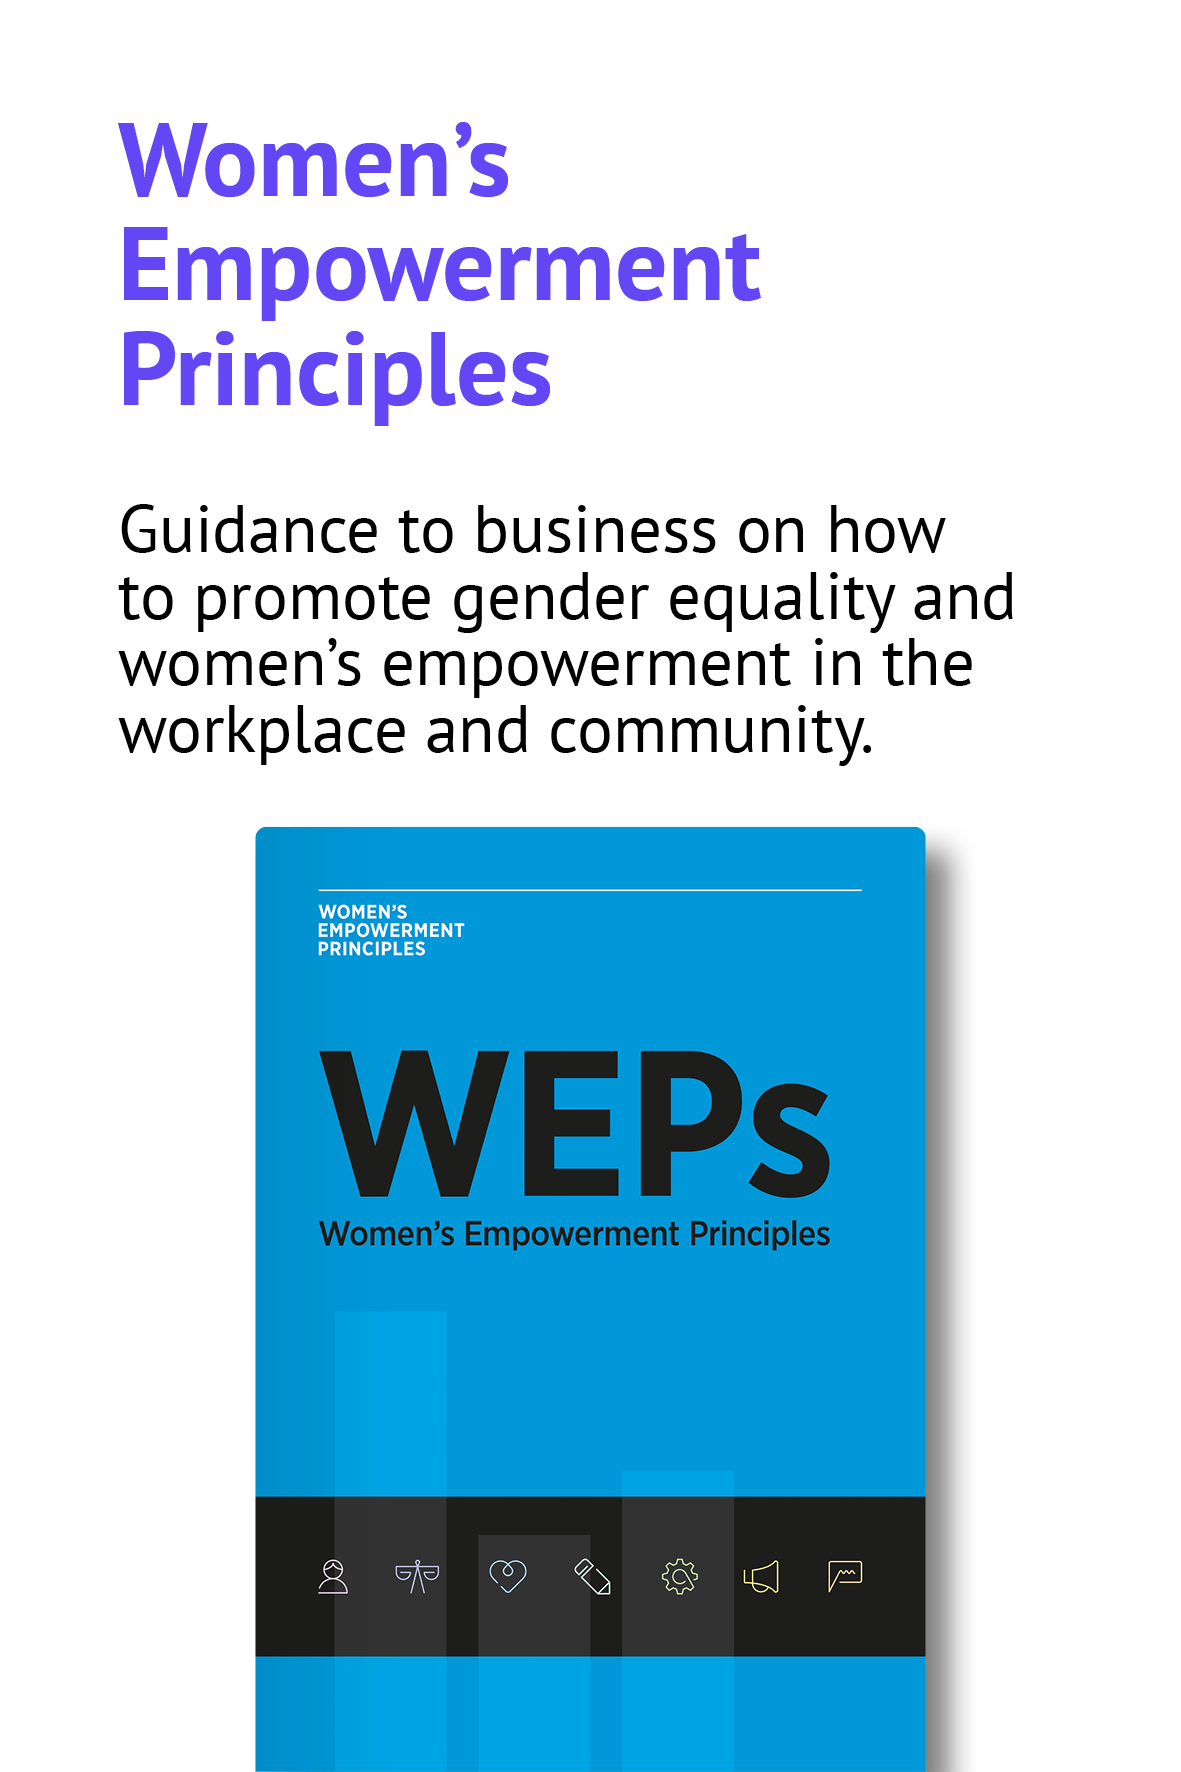 INDD-PNG E - MsSL - CARD UN Principles Card Women's Empowerment Principles (WEPs) - B10XH15CM RESO300.png